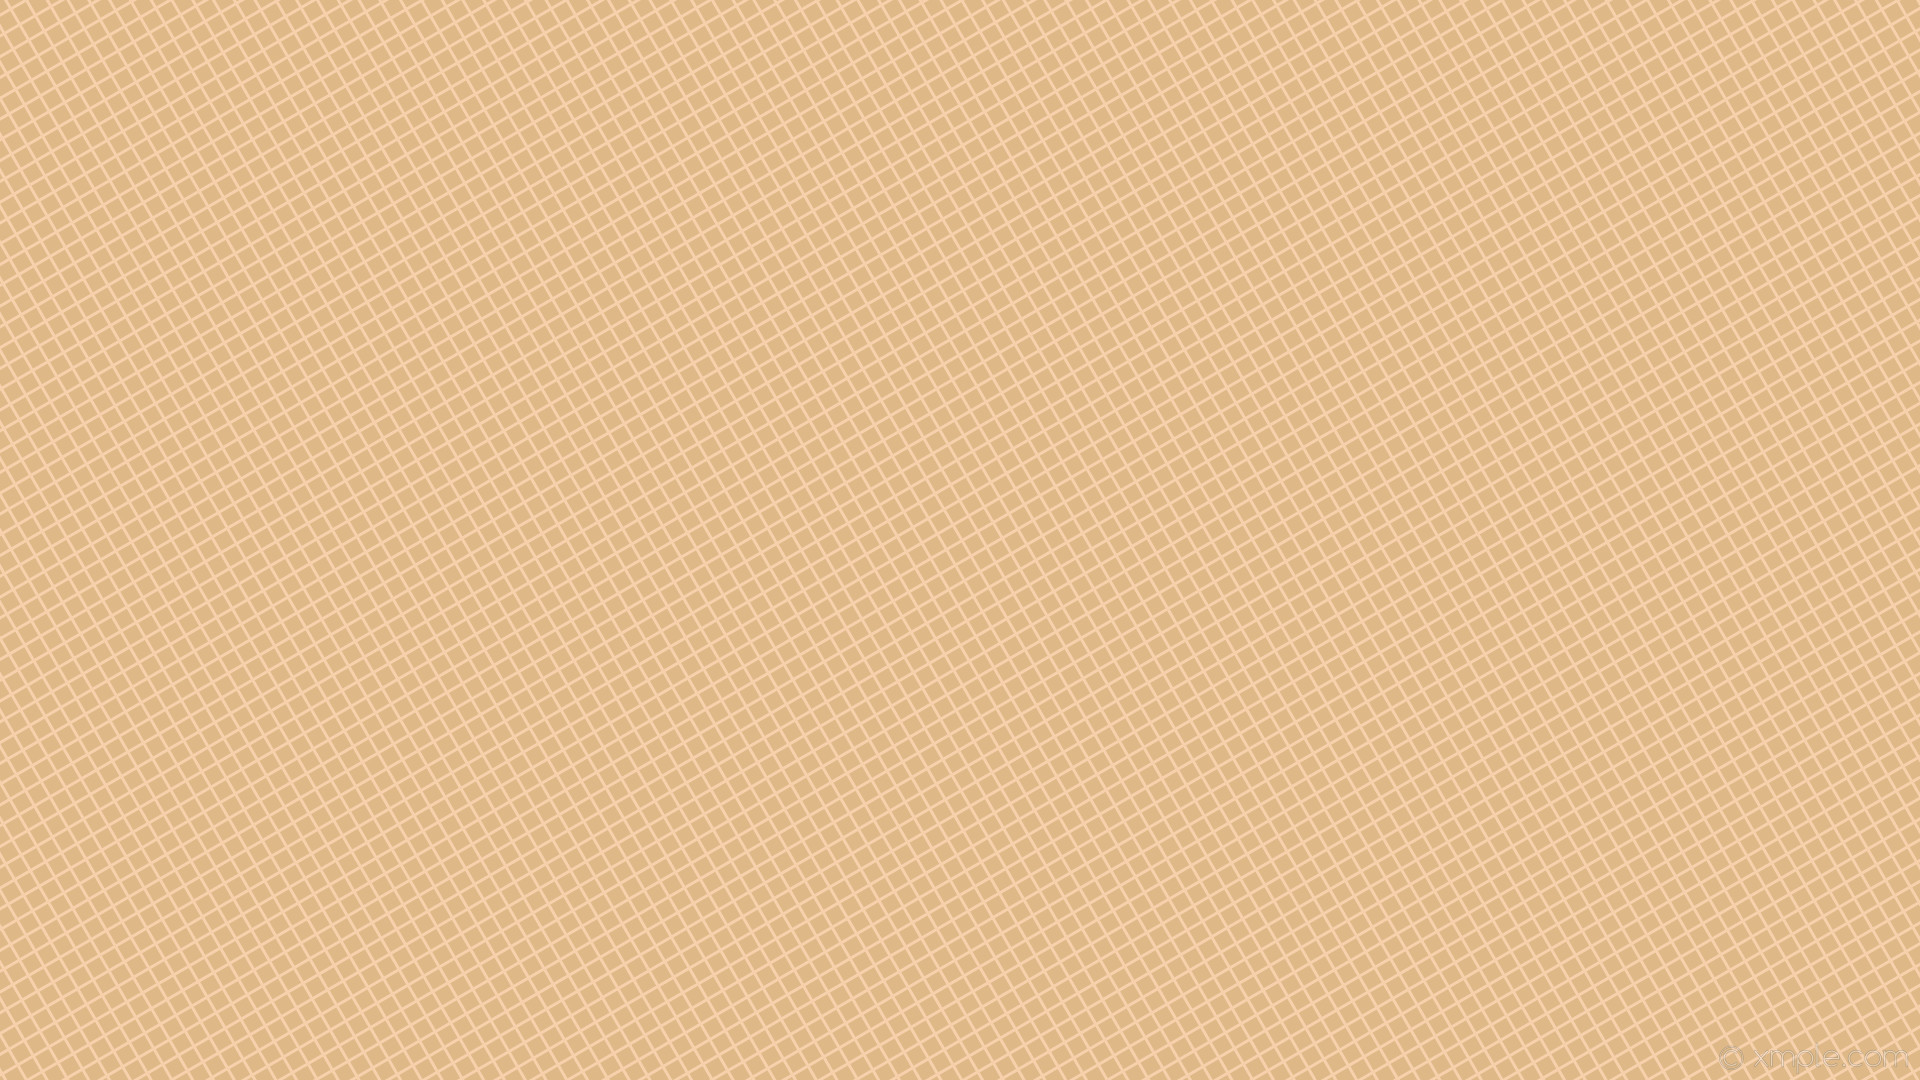 1920x1080 wallpaper grid graph paper yellow brown burly wood peach puff #deb887  #ffdab9 30Â°